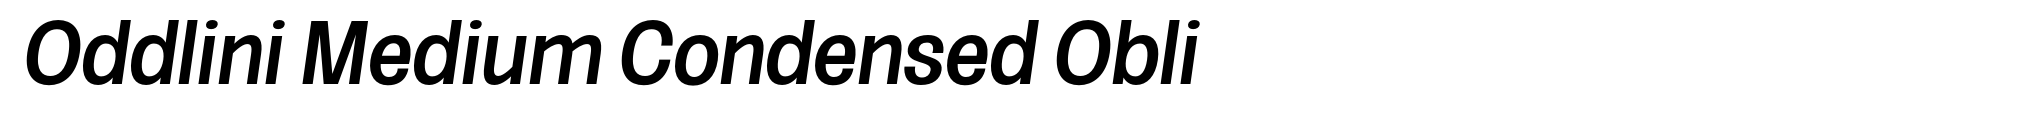 Oddlini Medium Condensed Obli image